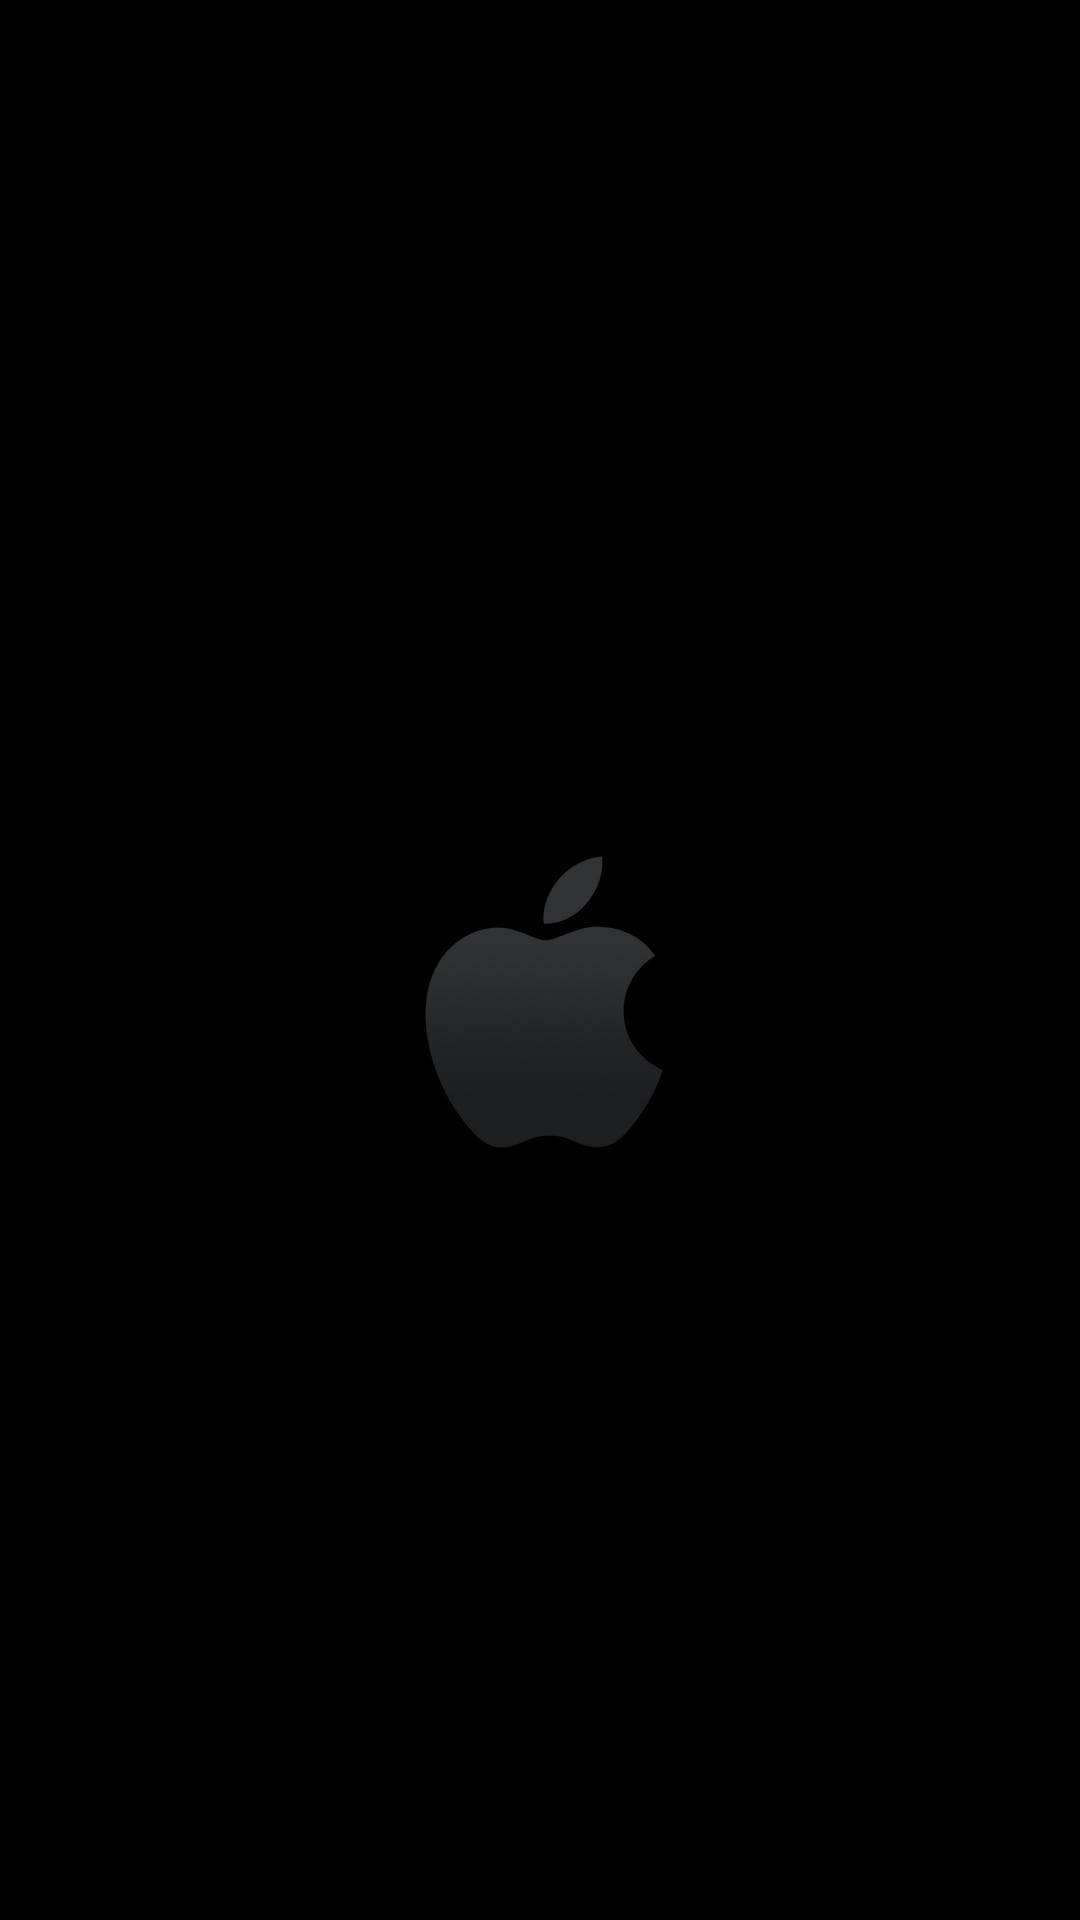 Full Hd Apple In Black Background